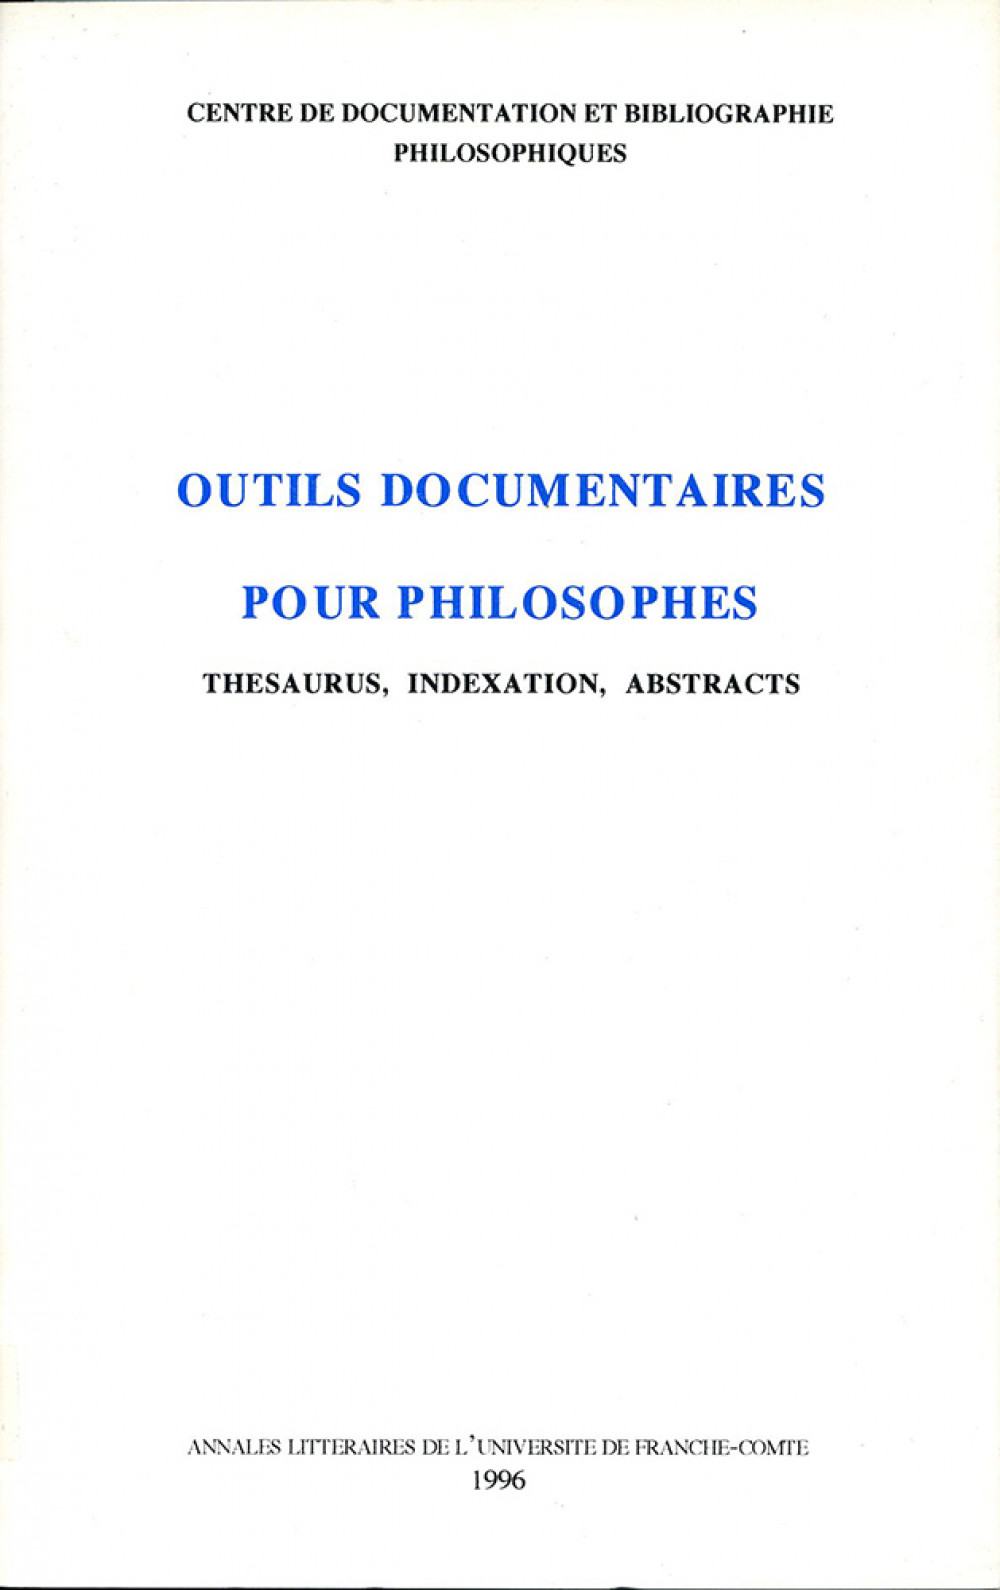 Outils documentaires pour philosophes